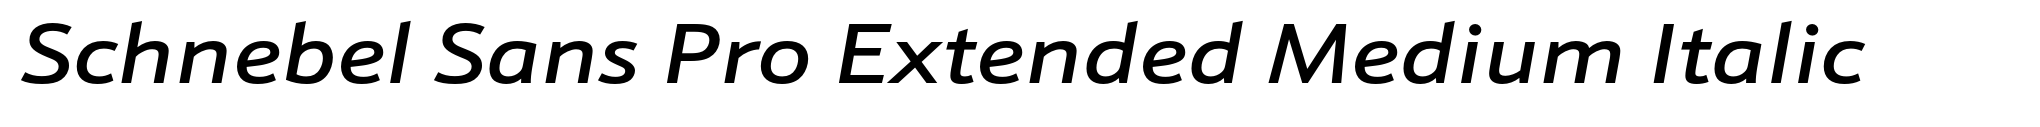 Schnebel Sans Pro Extended Medium Italic image